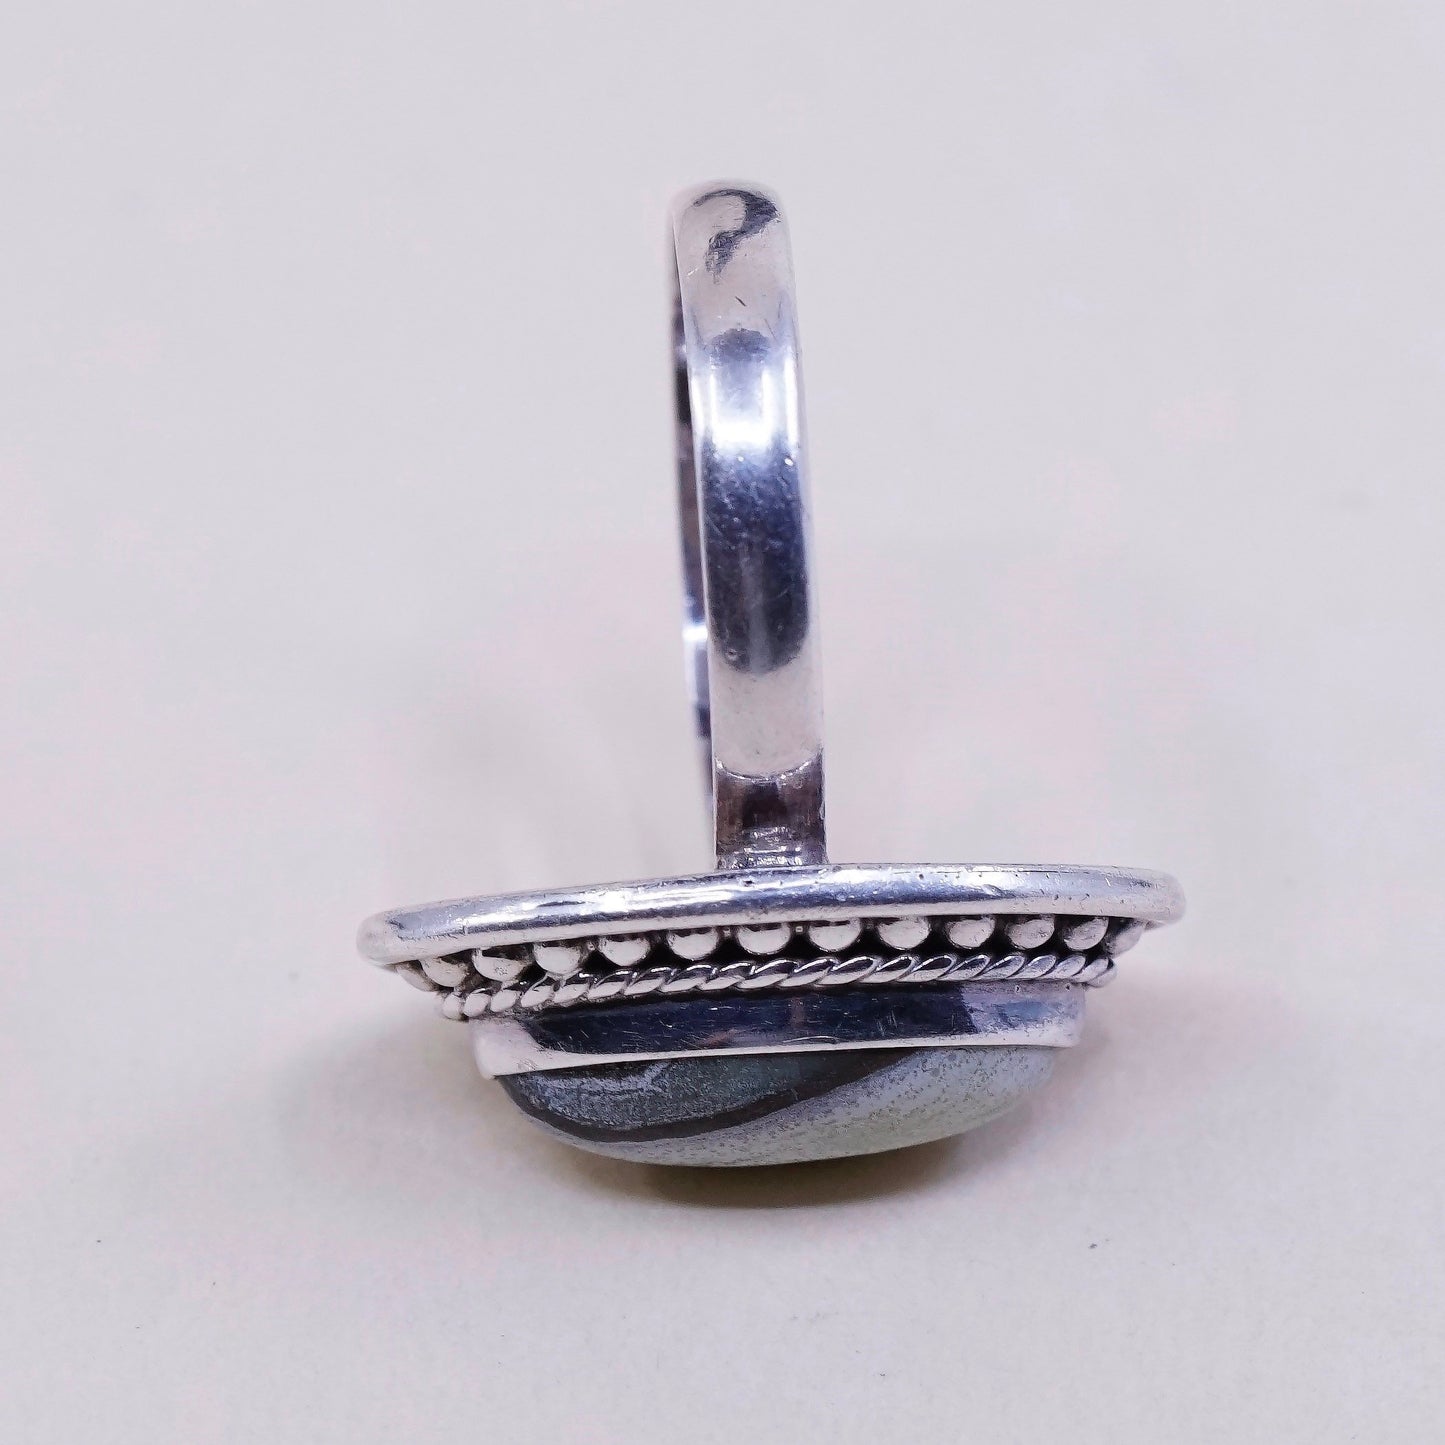 Size 7.5, vtg Southwestern sterling 925 silver handmade ring w/ agate N beads